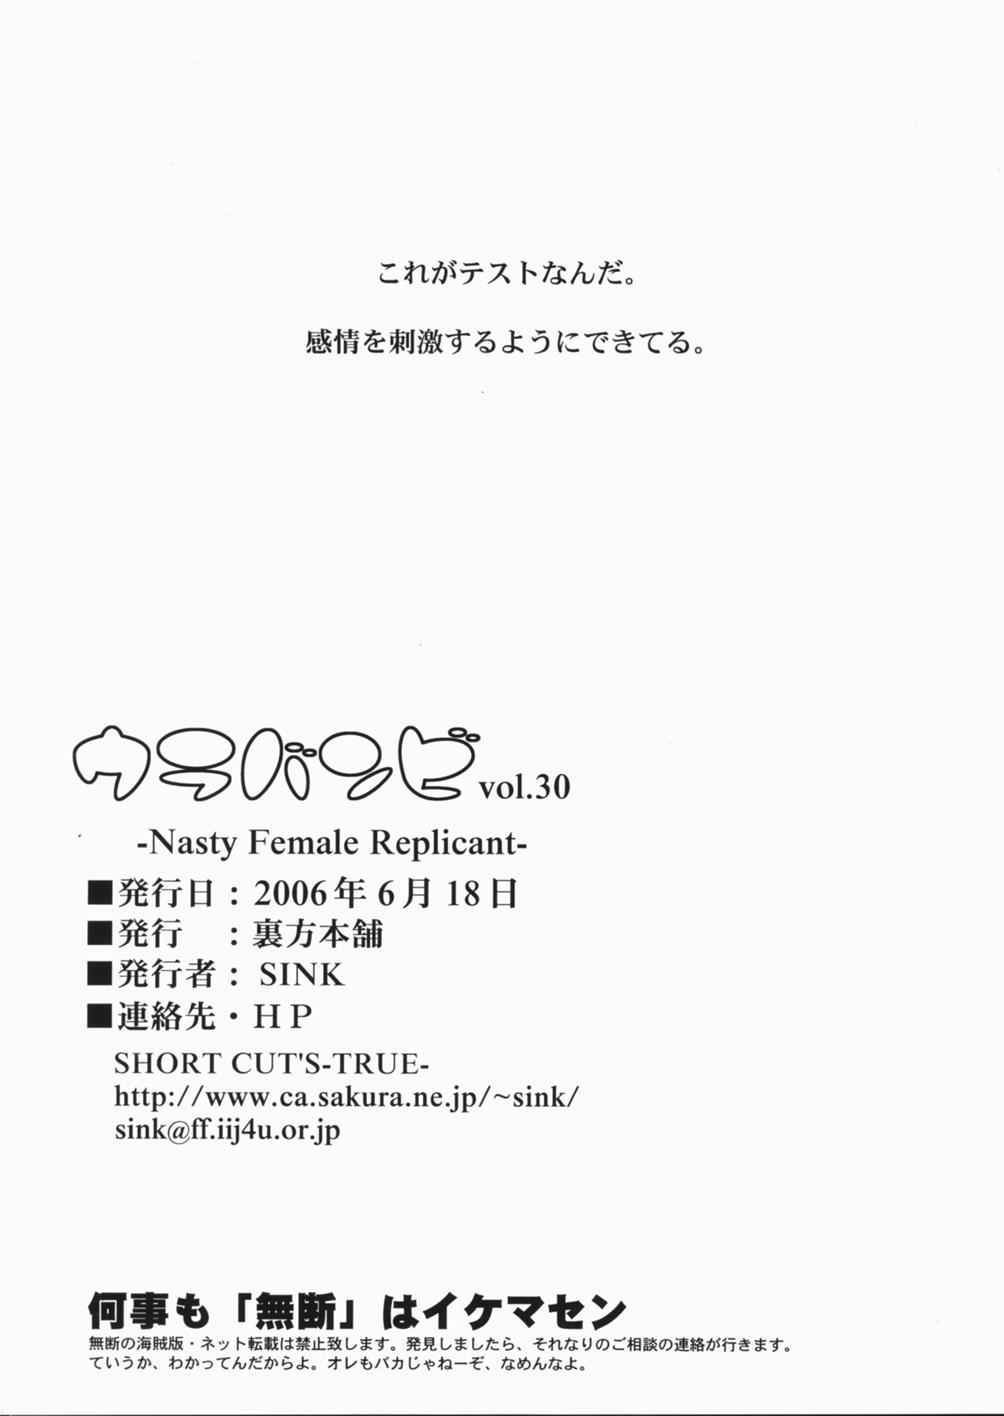 Urabambi vol.30 - Nasty Female Replicant 25